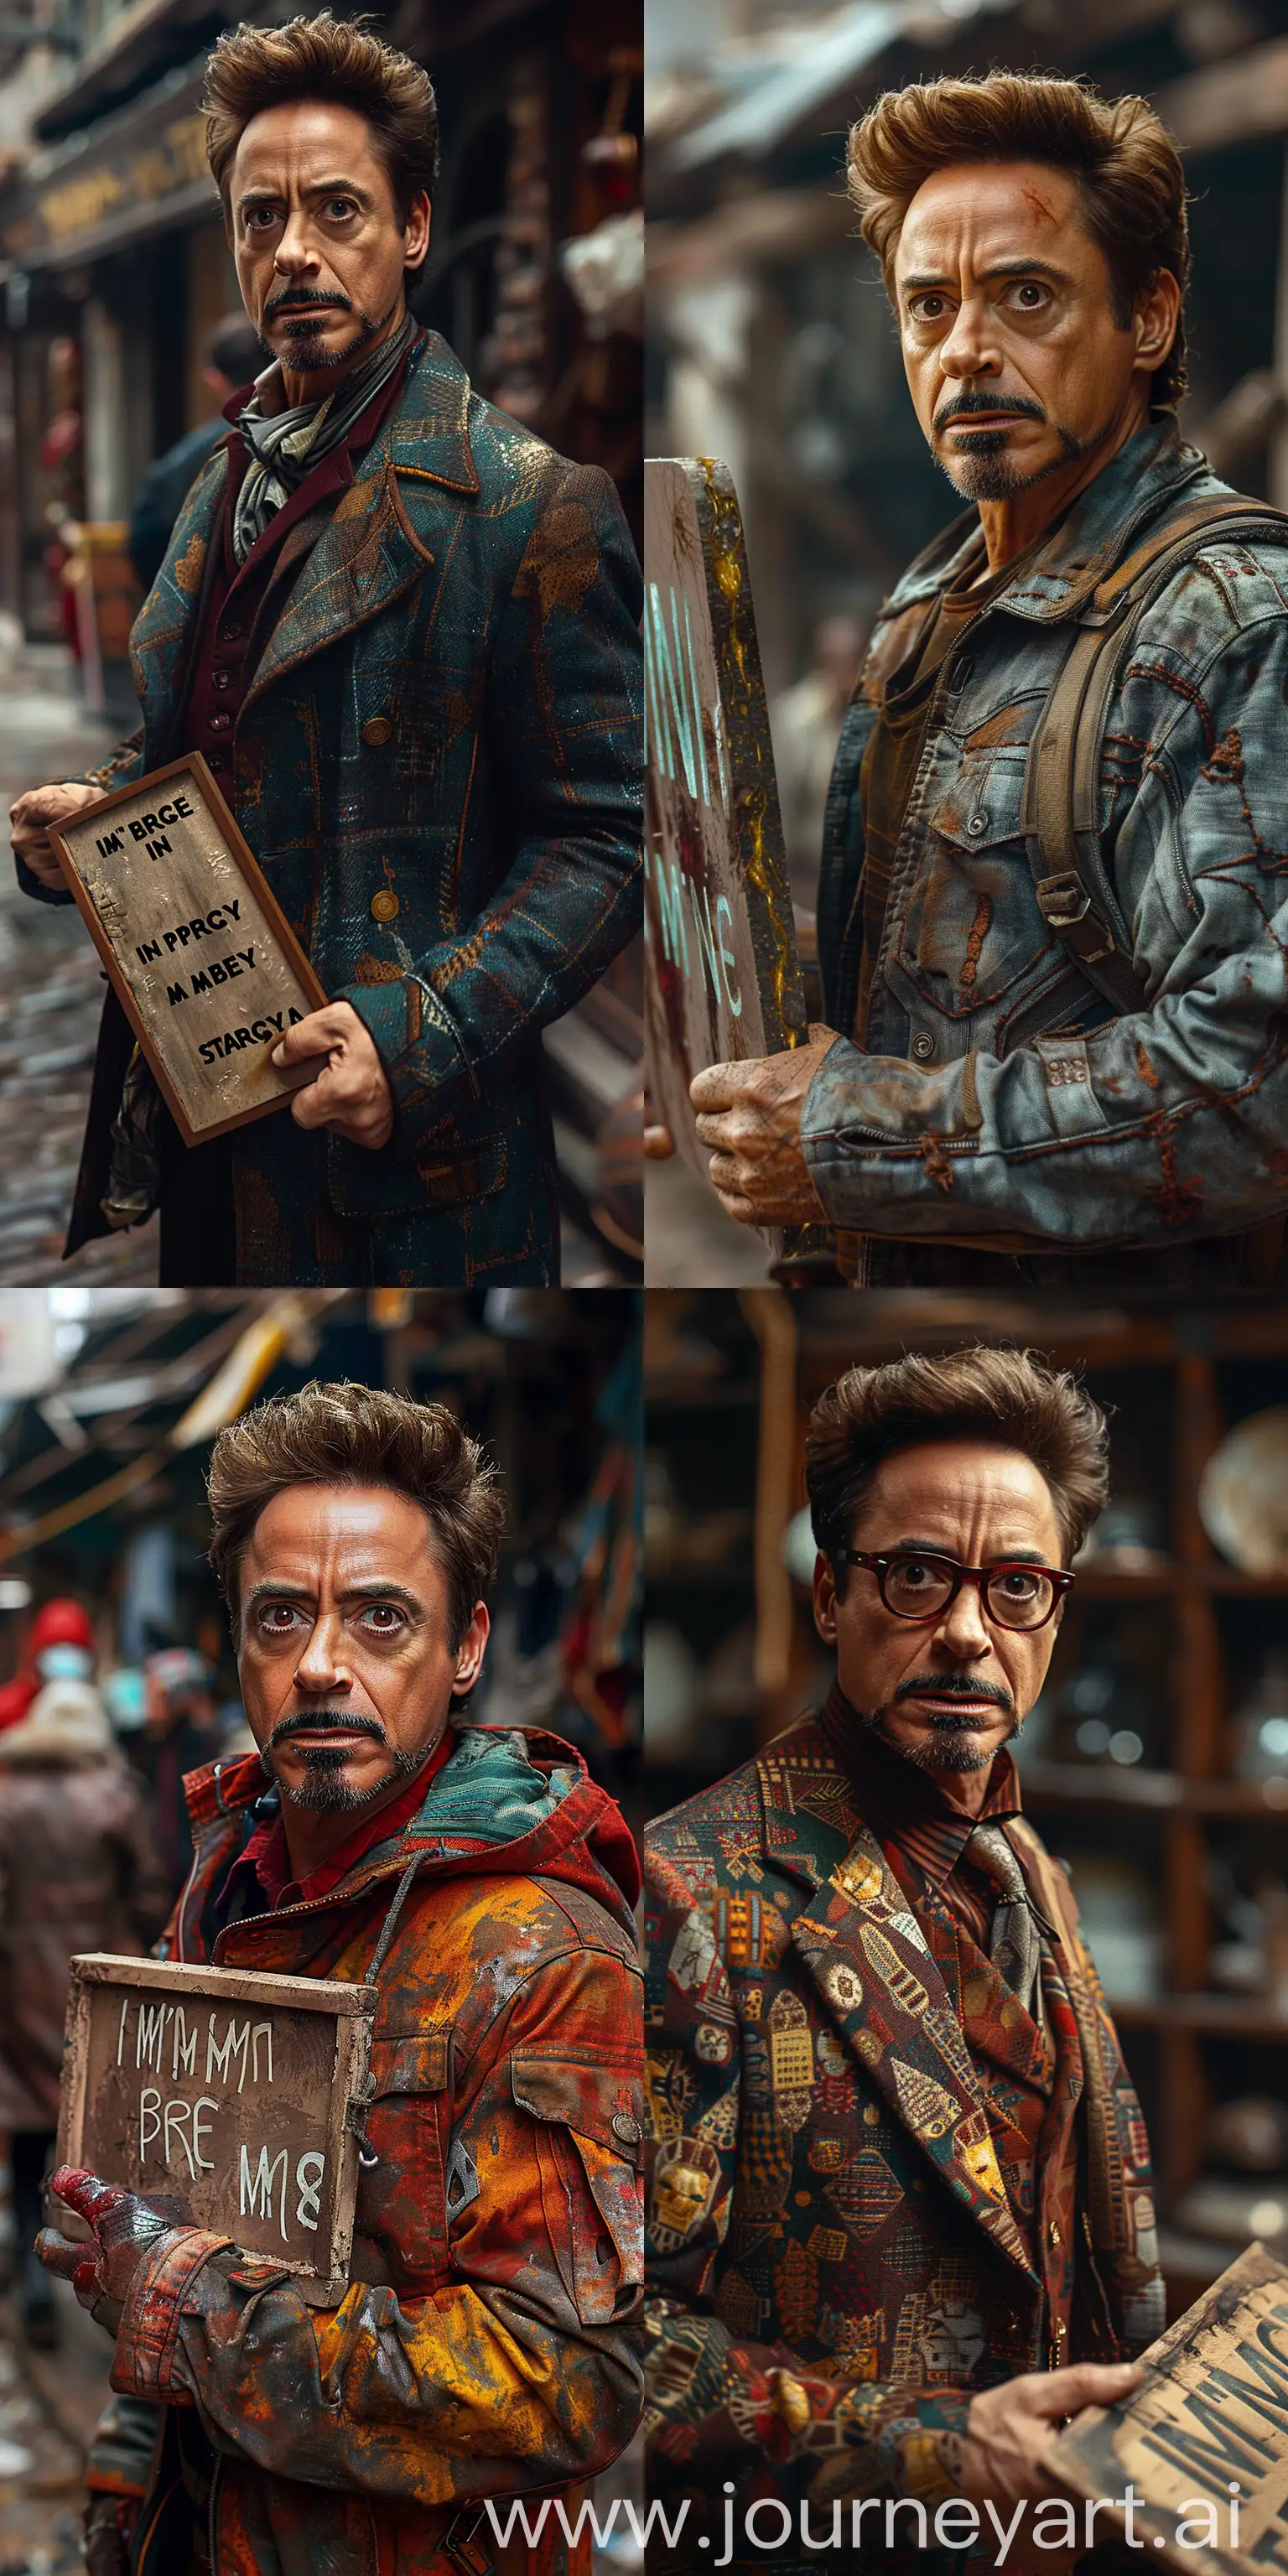 Robert-Downey-Jr-as-Tony-Stark-Announcing-Return-to-MCU